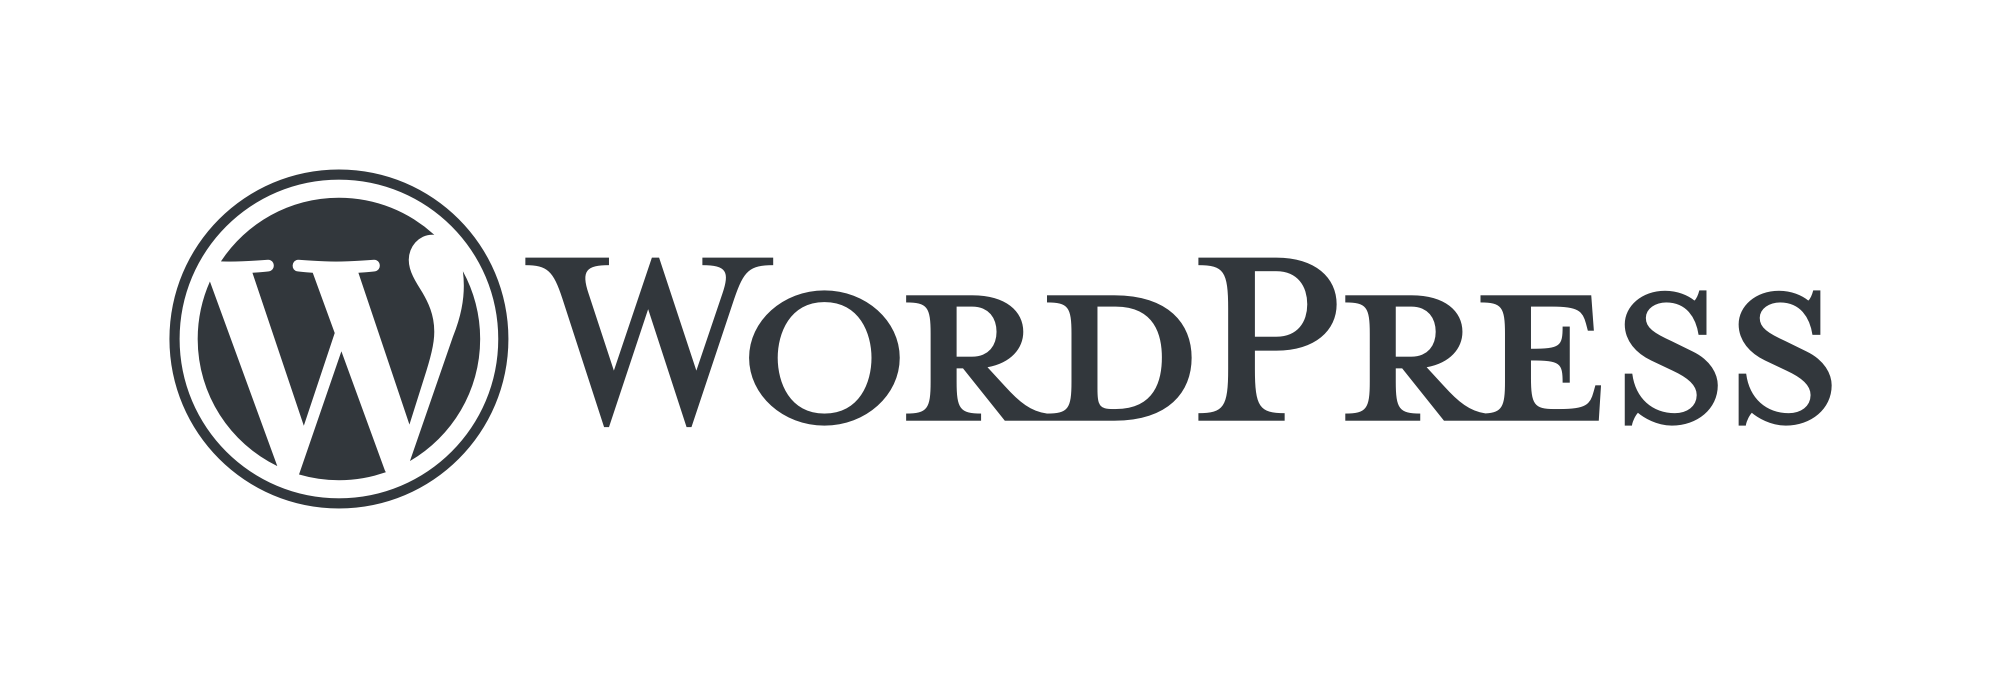 Expertise wordpress.webp